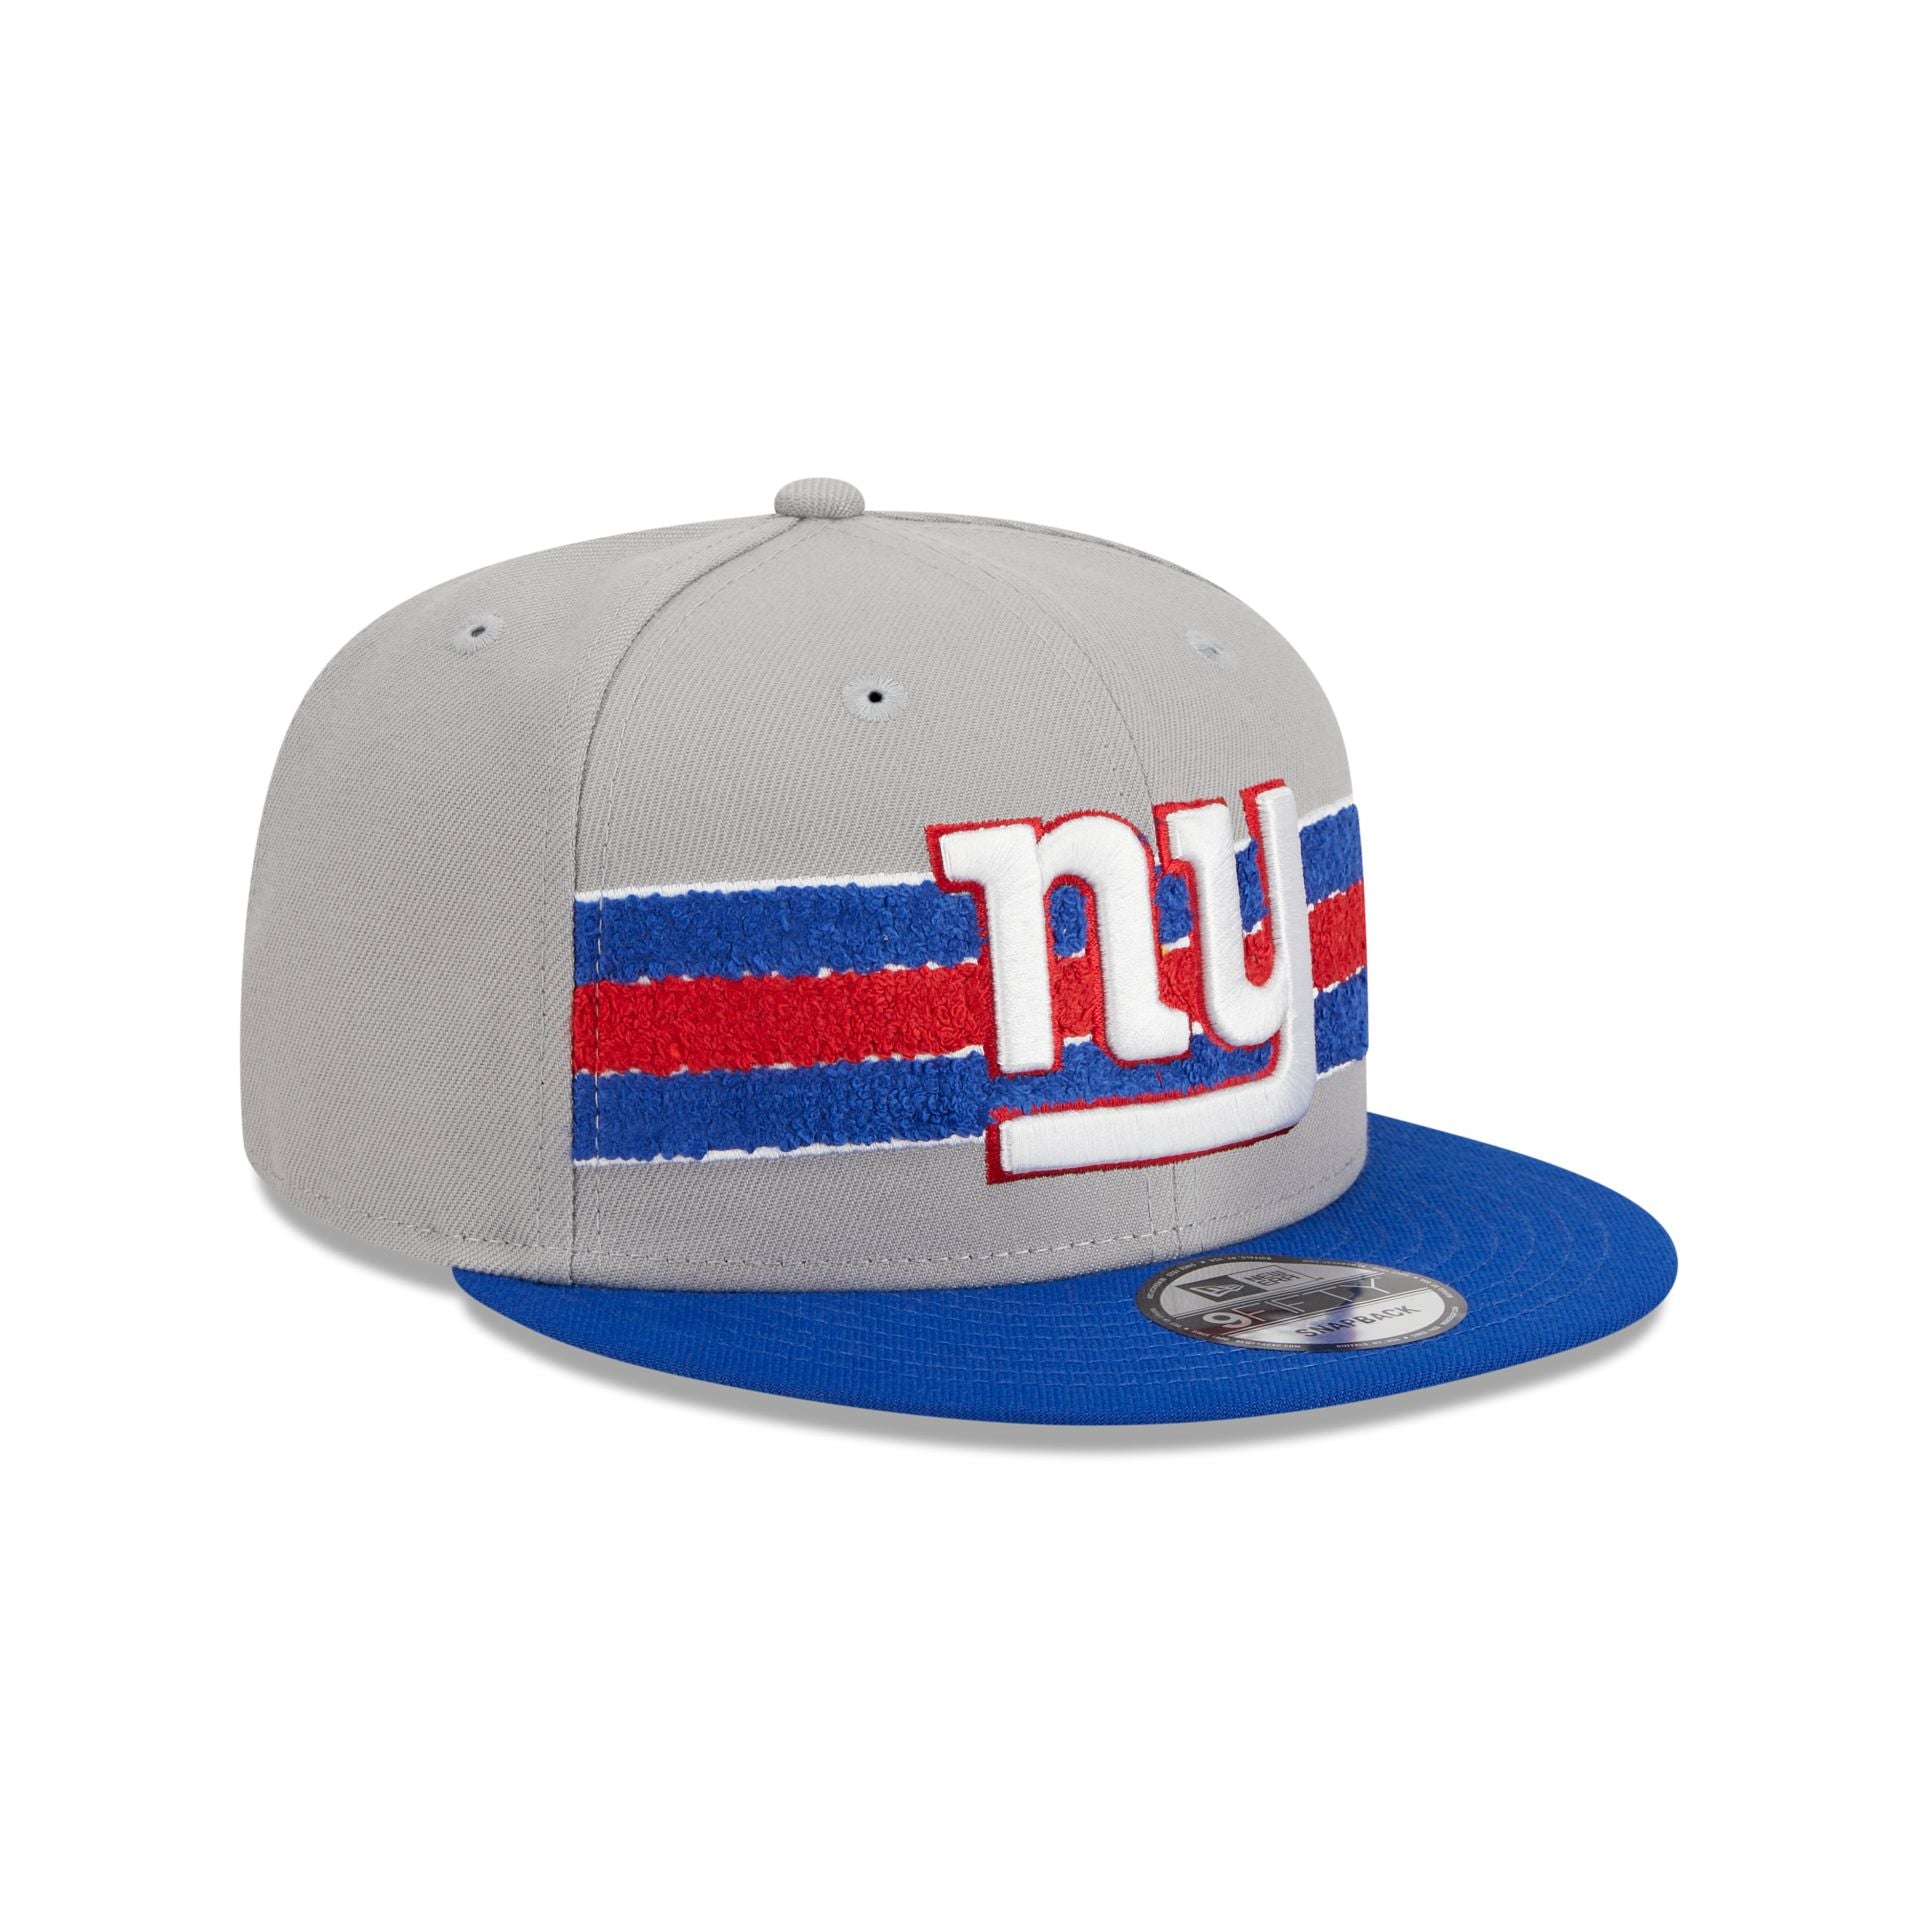 New York Giants Lift Pass 9FIFTY Snapback Hat, Gray, NFL by New Era